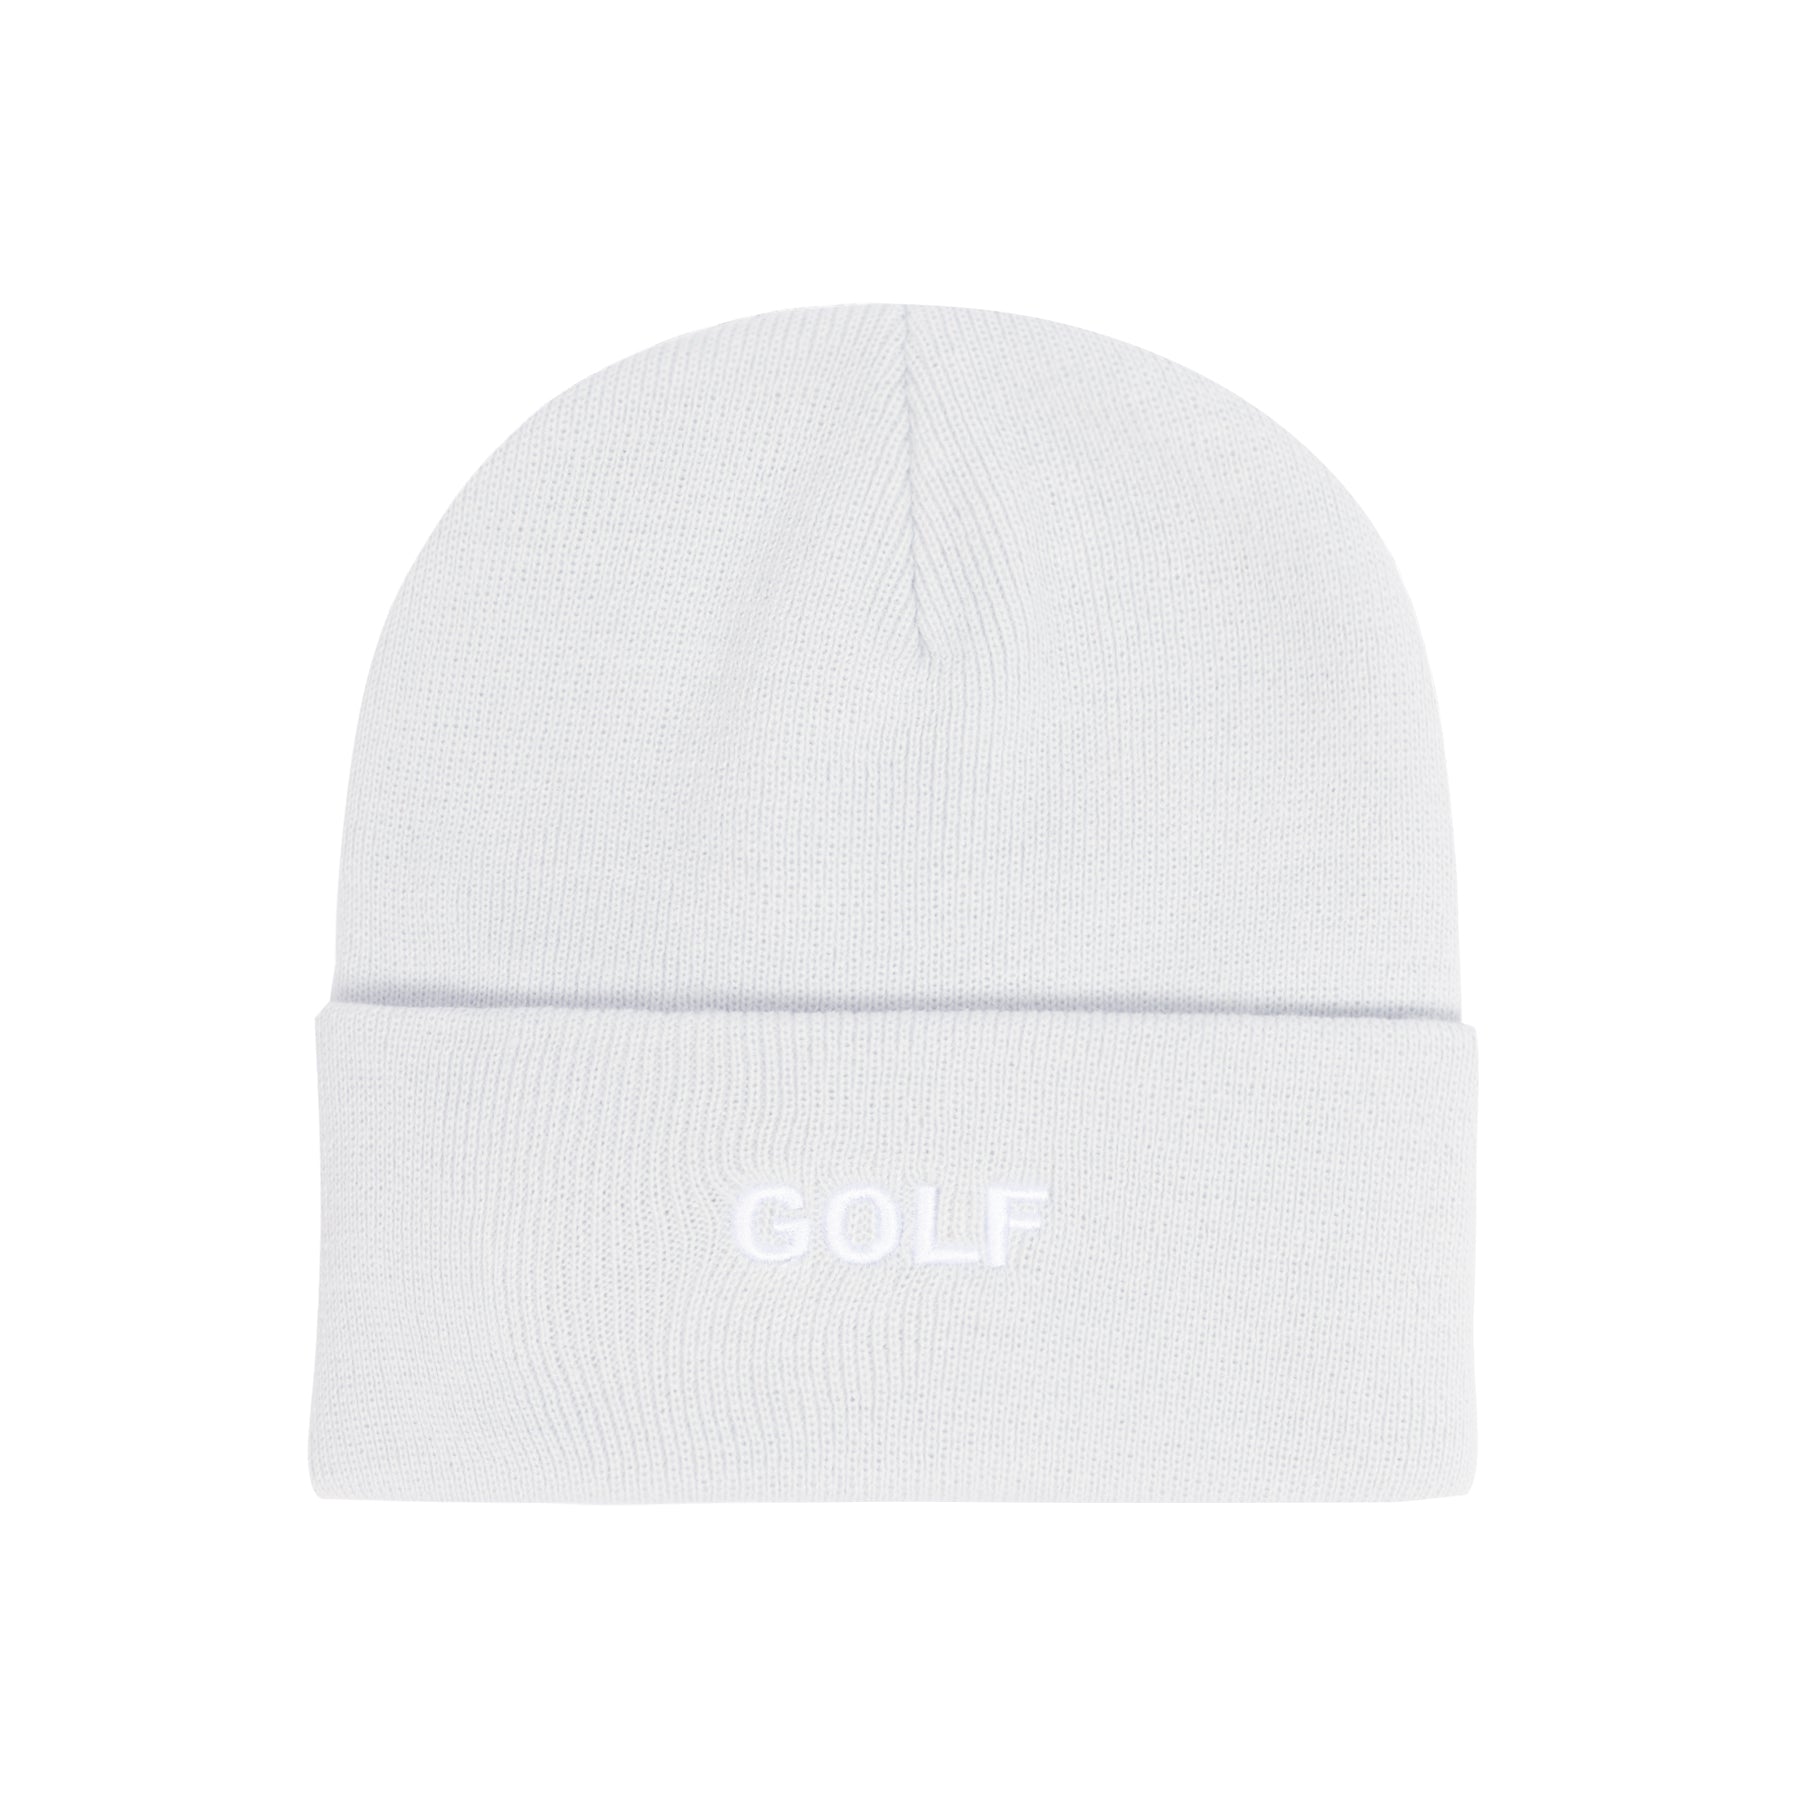 GOLF WANG | HATS – Golf Wang